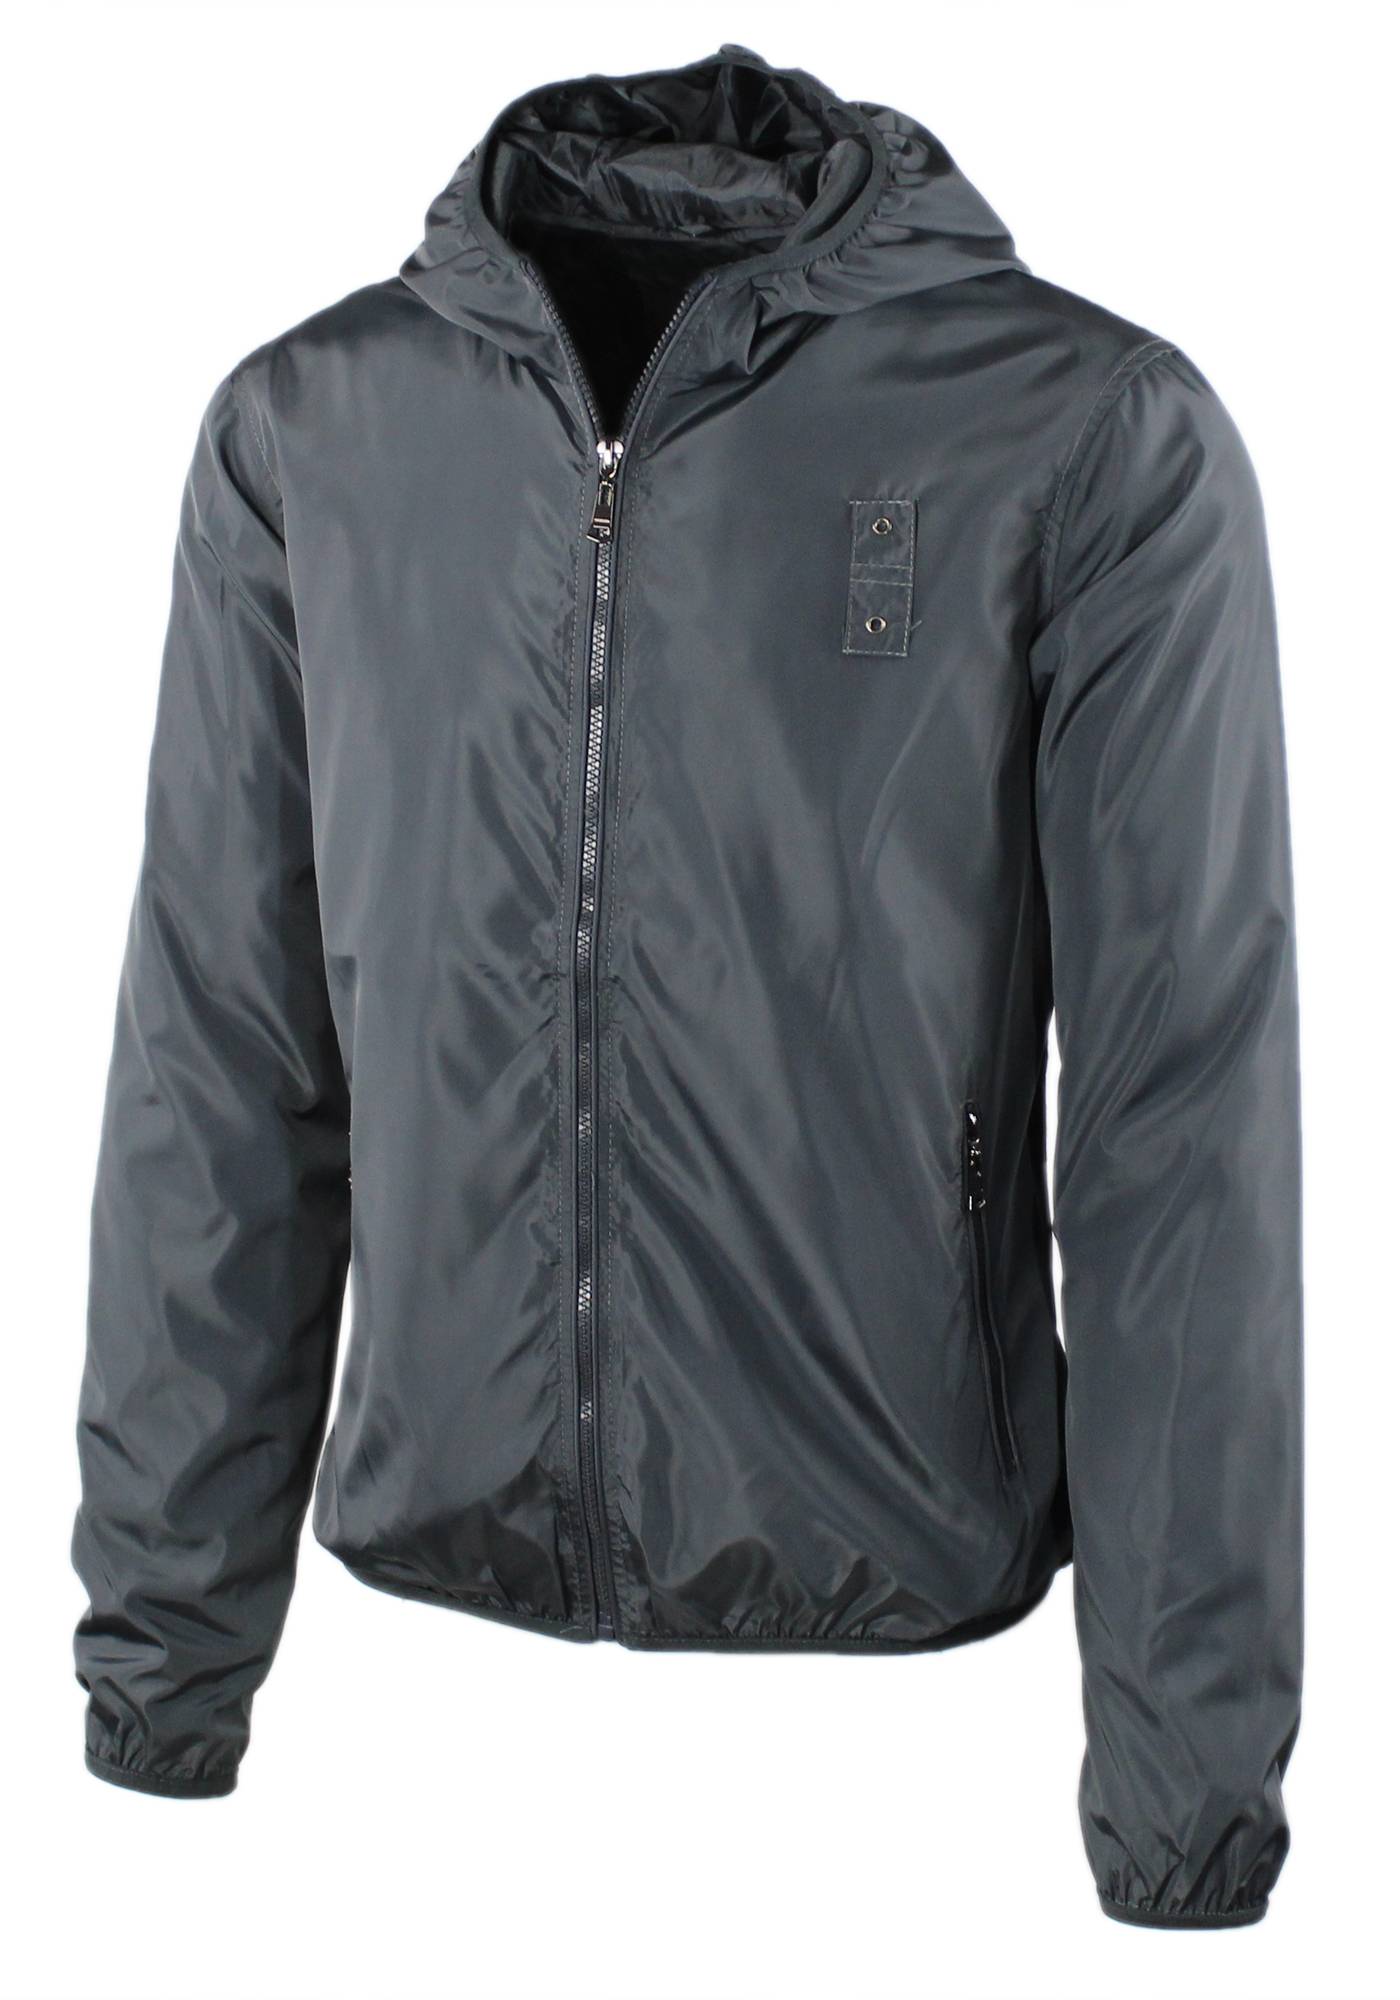 Lightweight Mens Jacket Windbreaker Waterproof Coat Short Spring | eBay